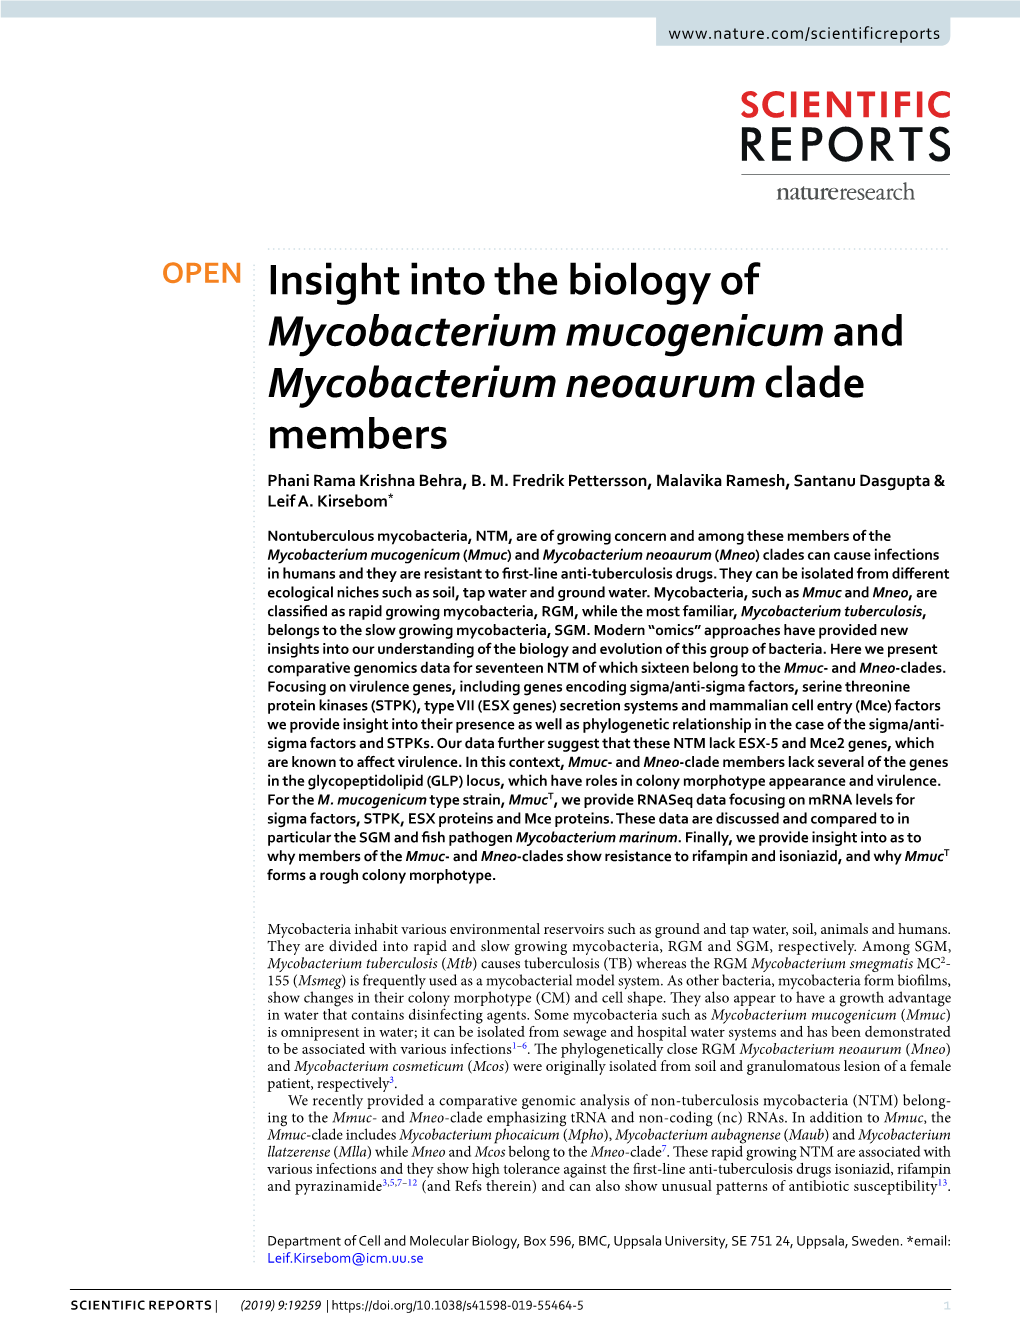 Insight Into the Biology of Mycobacterium Mucogenicum and Mycobacterium Neoaurum Clade Members Phani Rama Krishna Behra, B